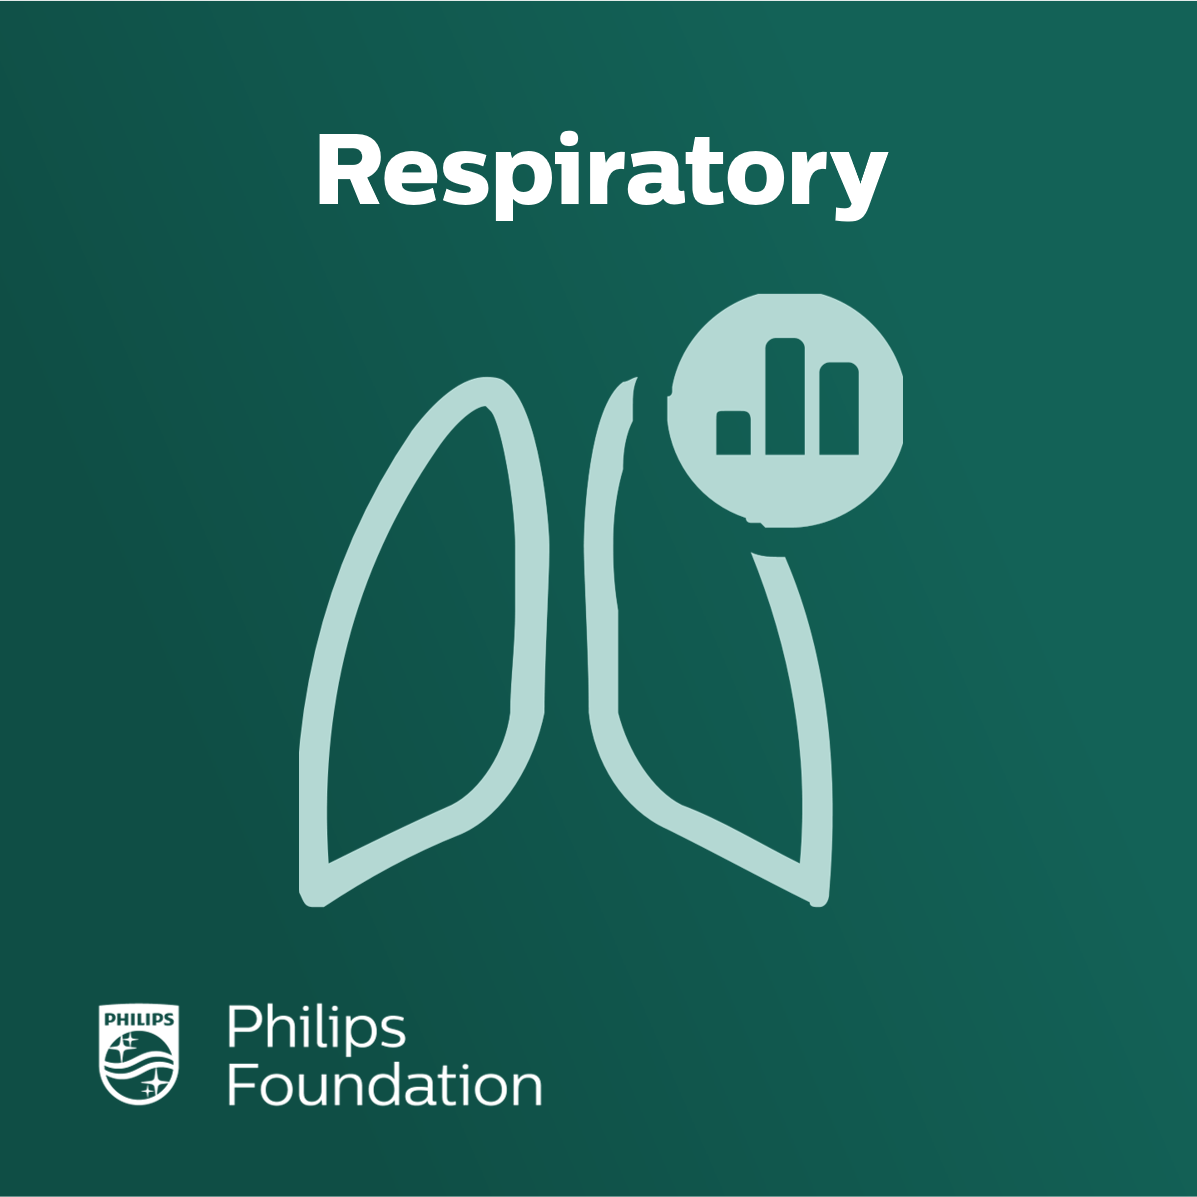 philips_foundation_respiratory_icon